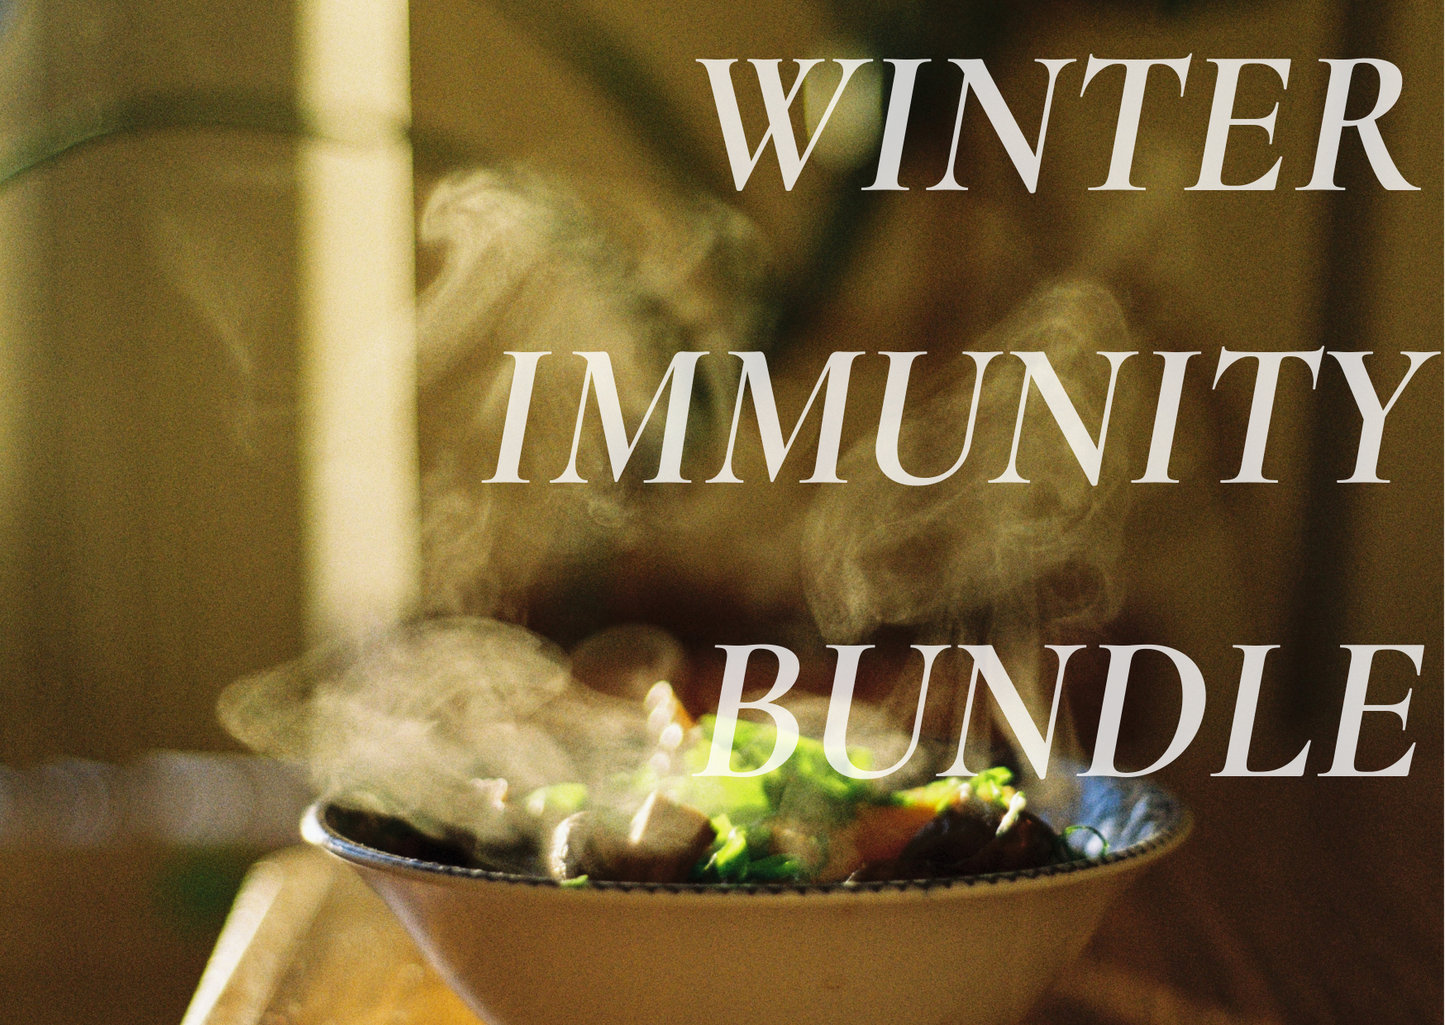 Winter immunity bundle. Herbal soup in a bowl simmering.